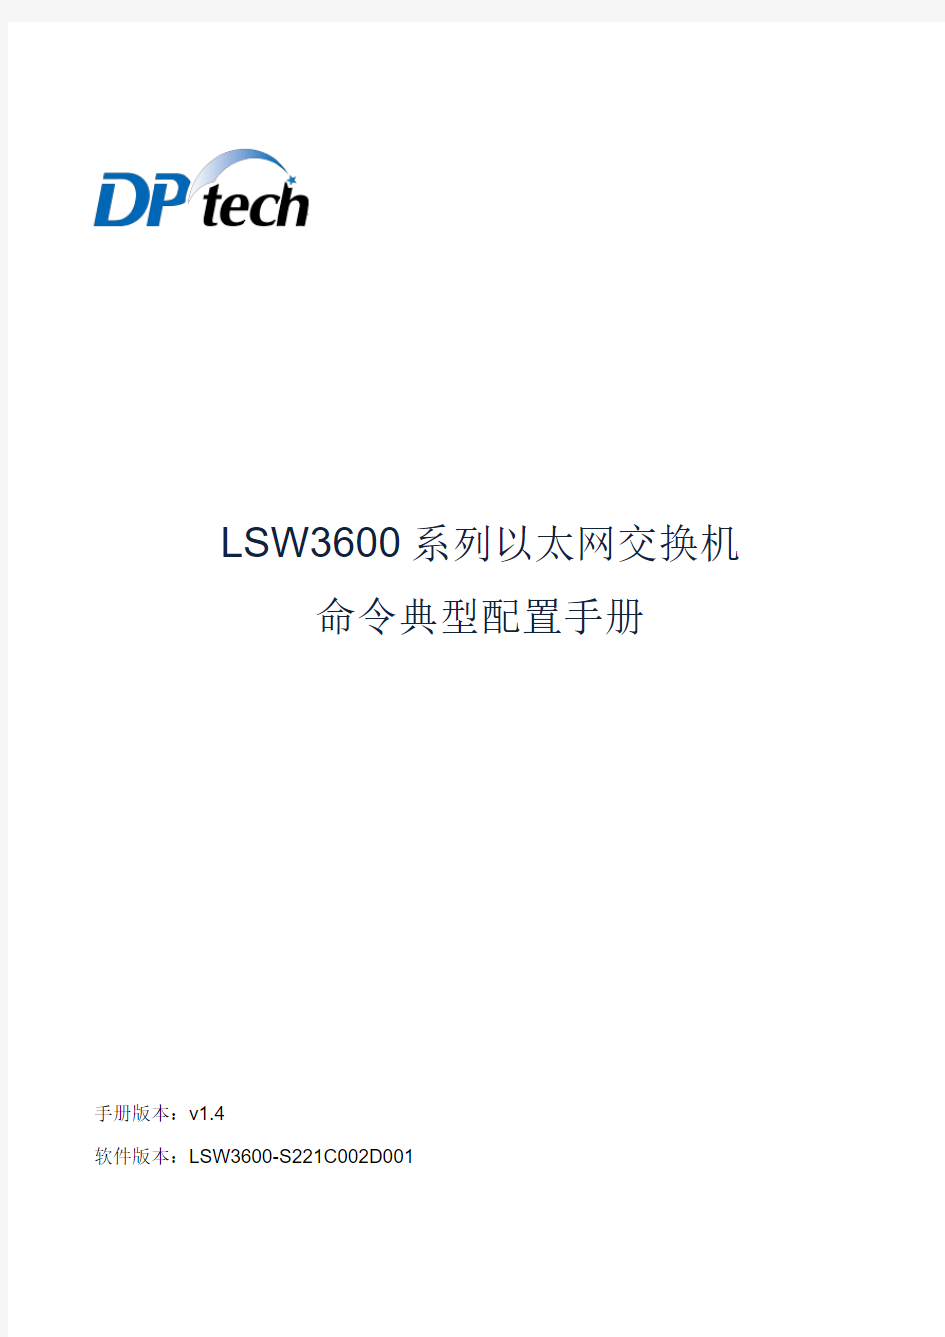 DPtech LSW3600系列以太网交换机命令典型配置手册v1.4